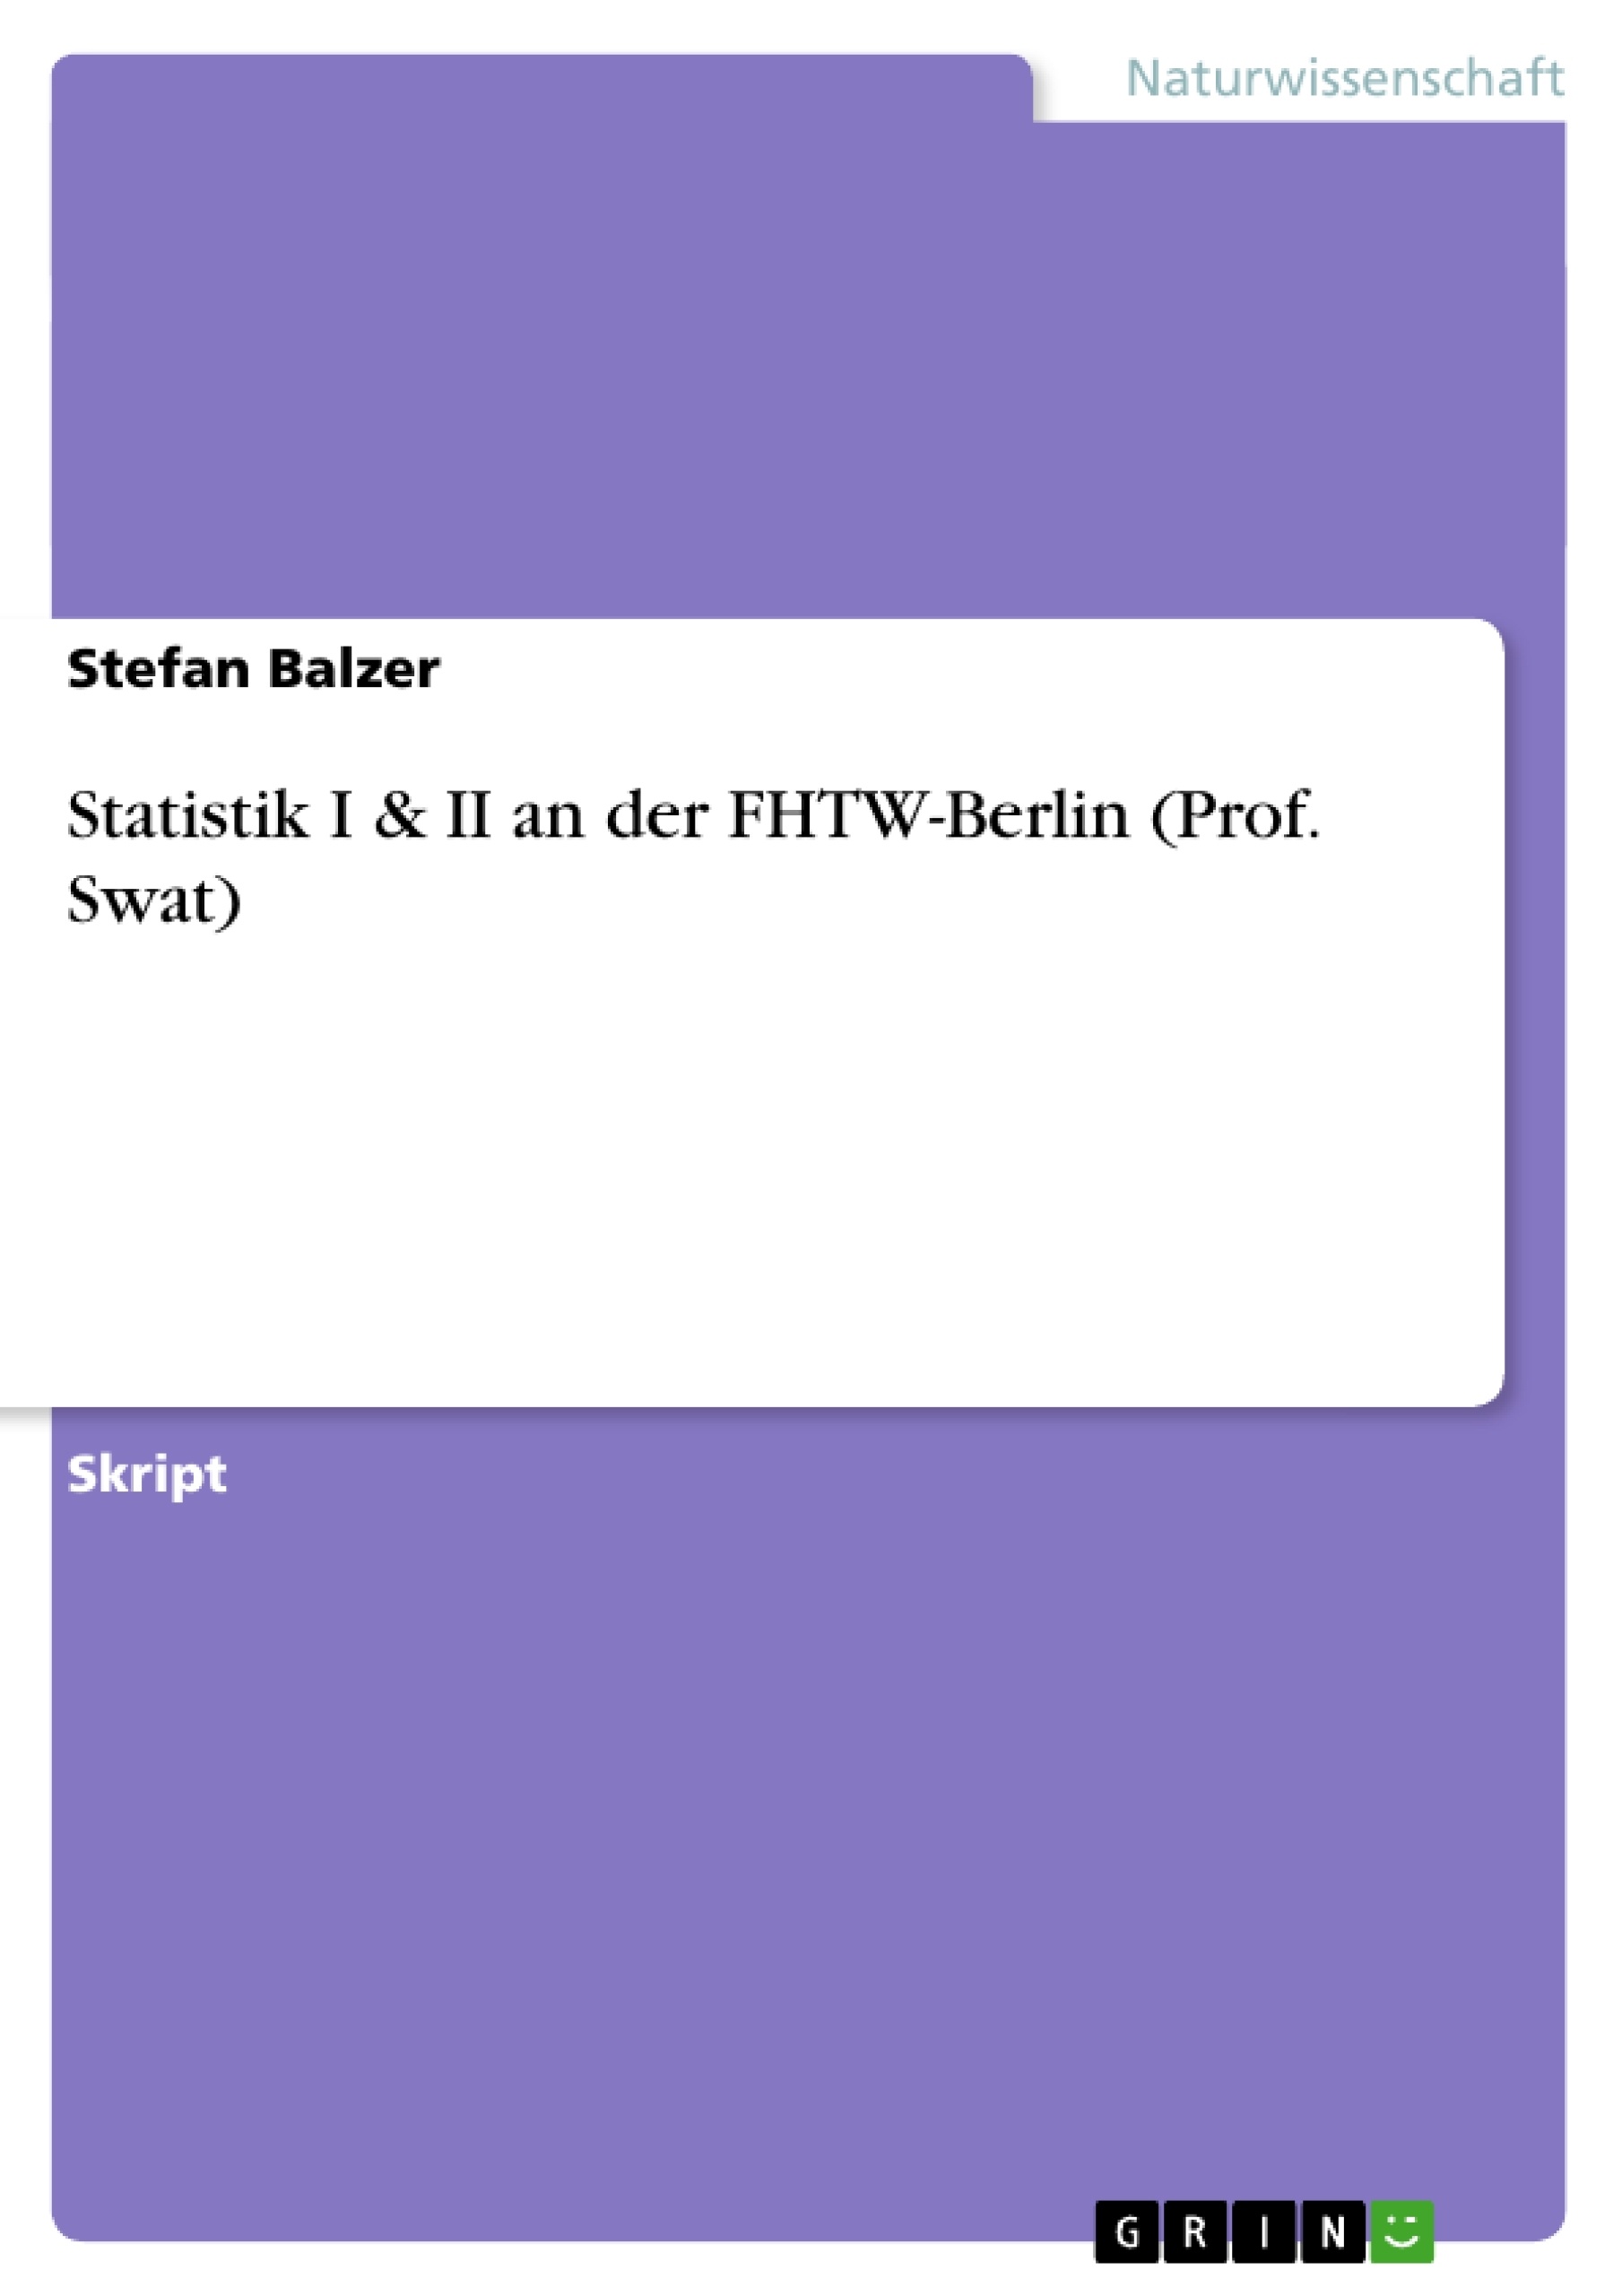 Título: Statistik I & II an der FHTW-Berlin (Prof. Swat)